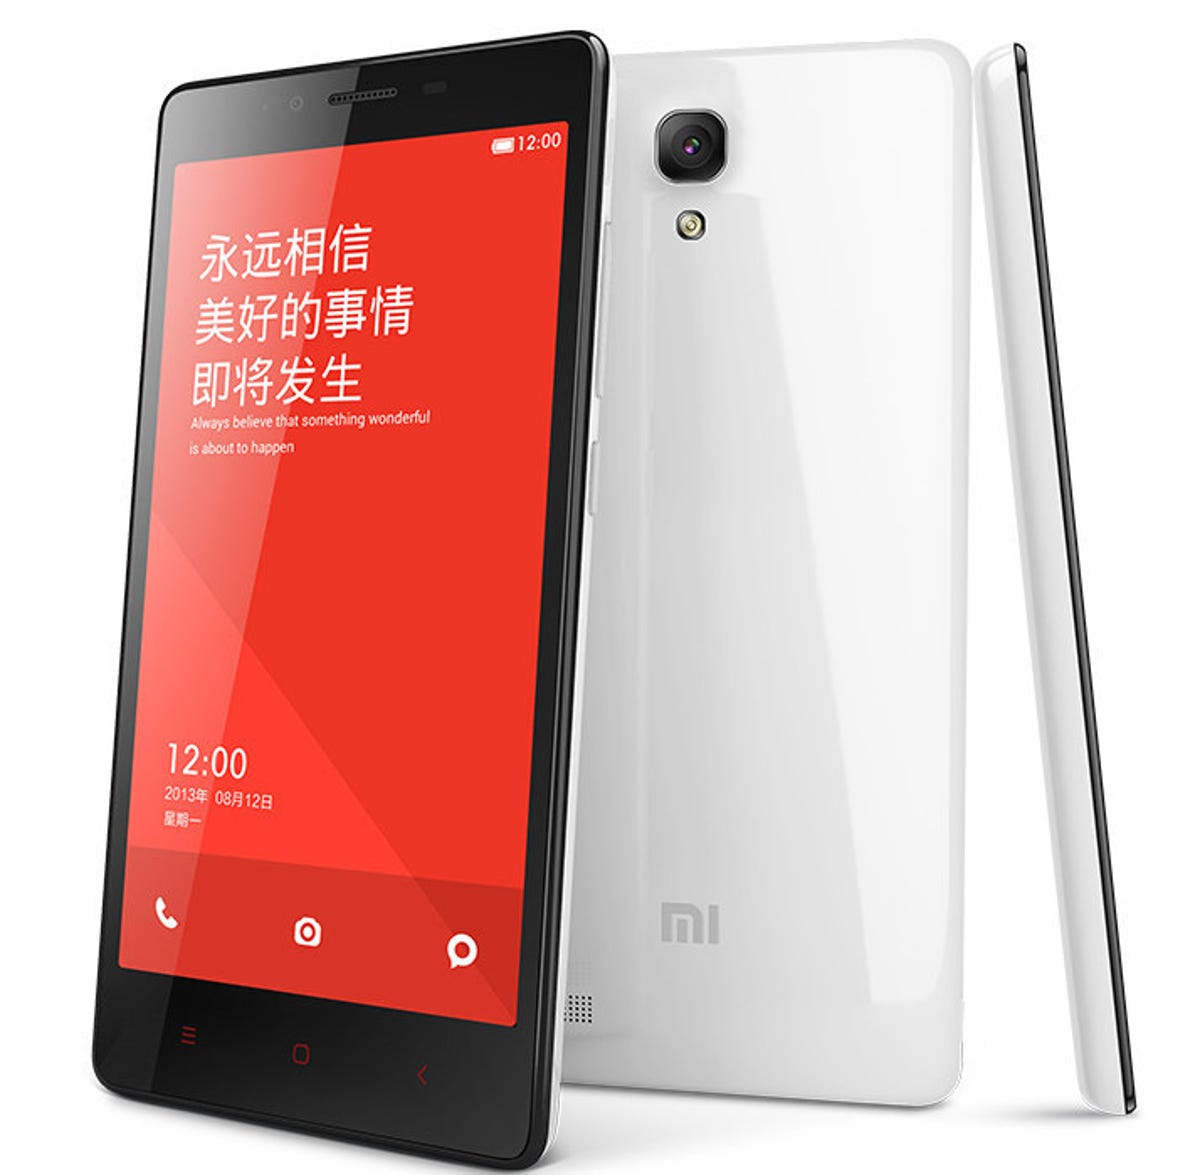 Xiaomi Redmi Note review: Xiaomi unveils Redmi Note phablet for